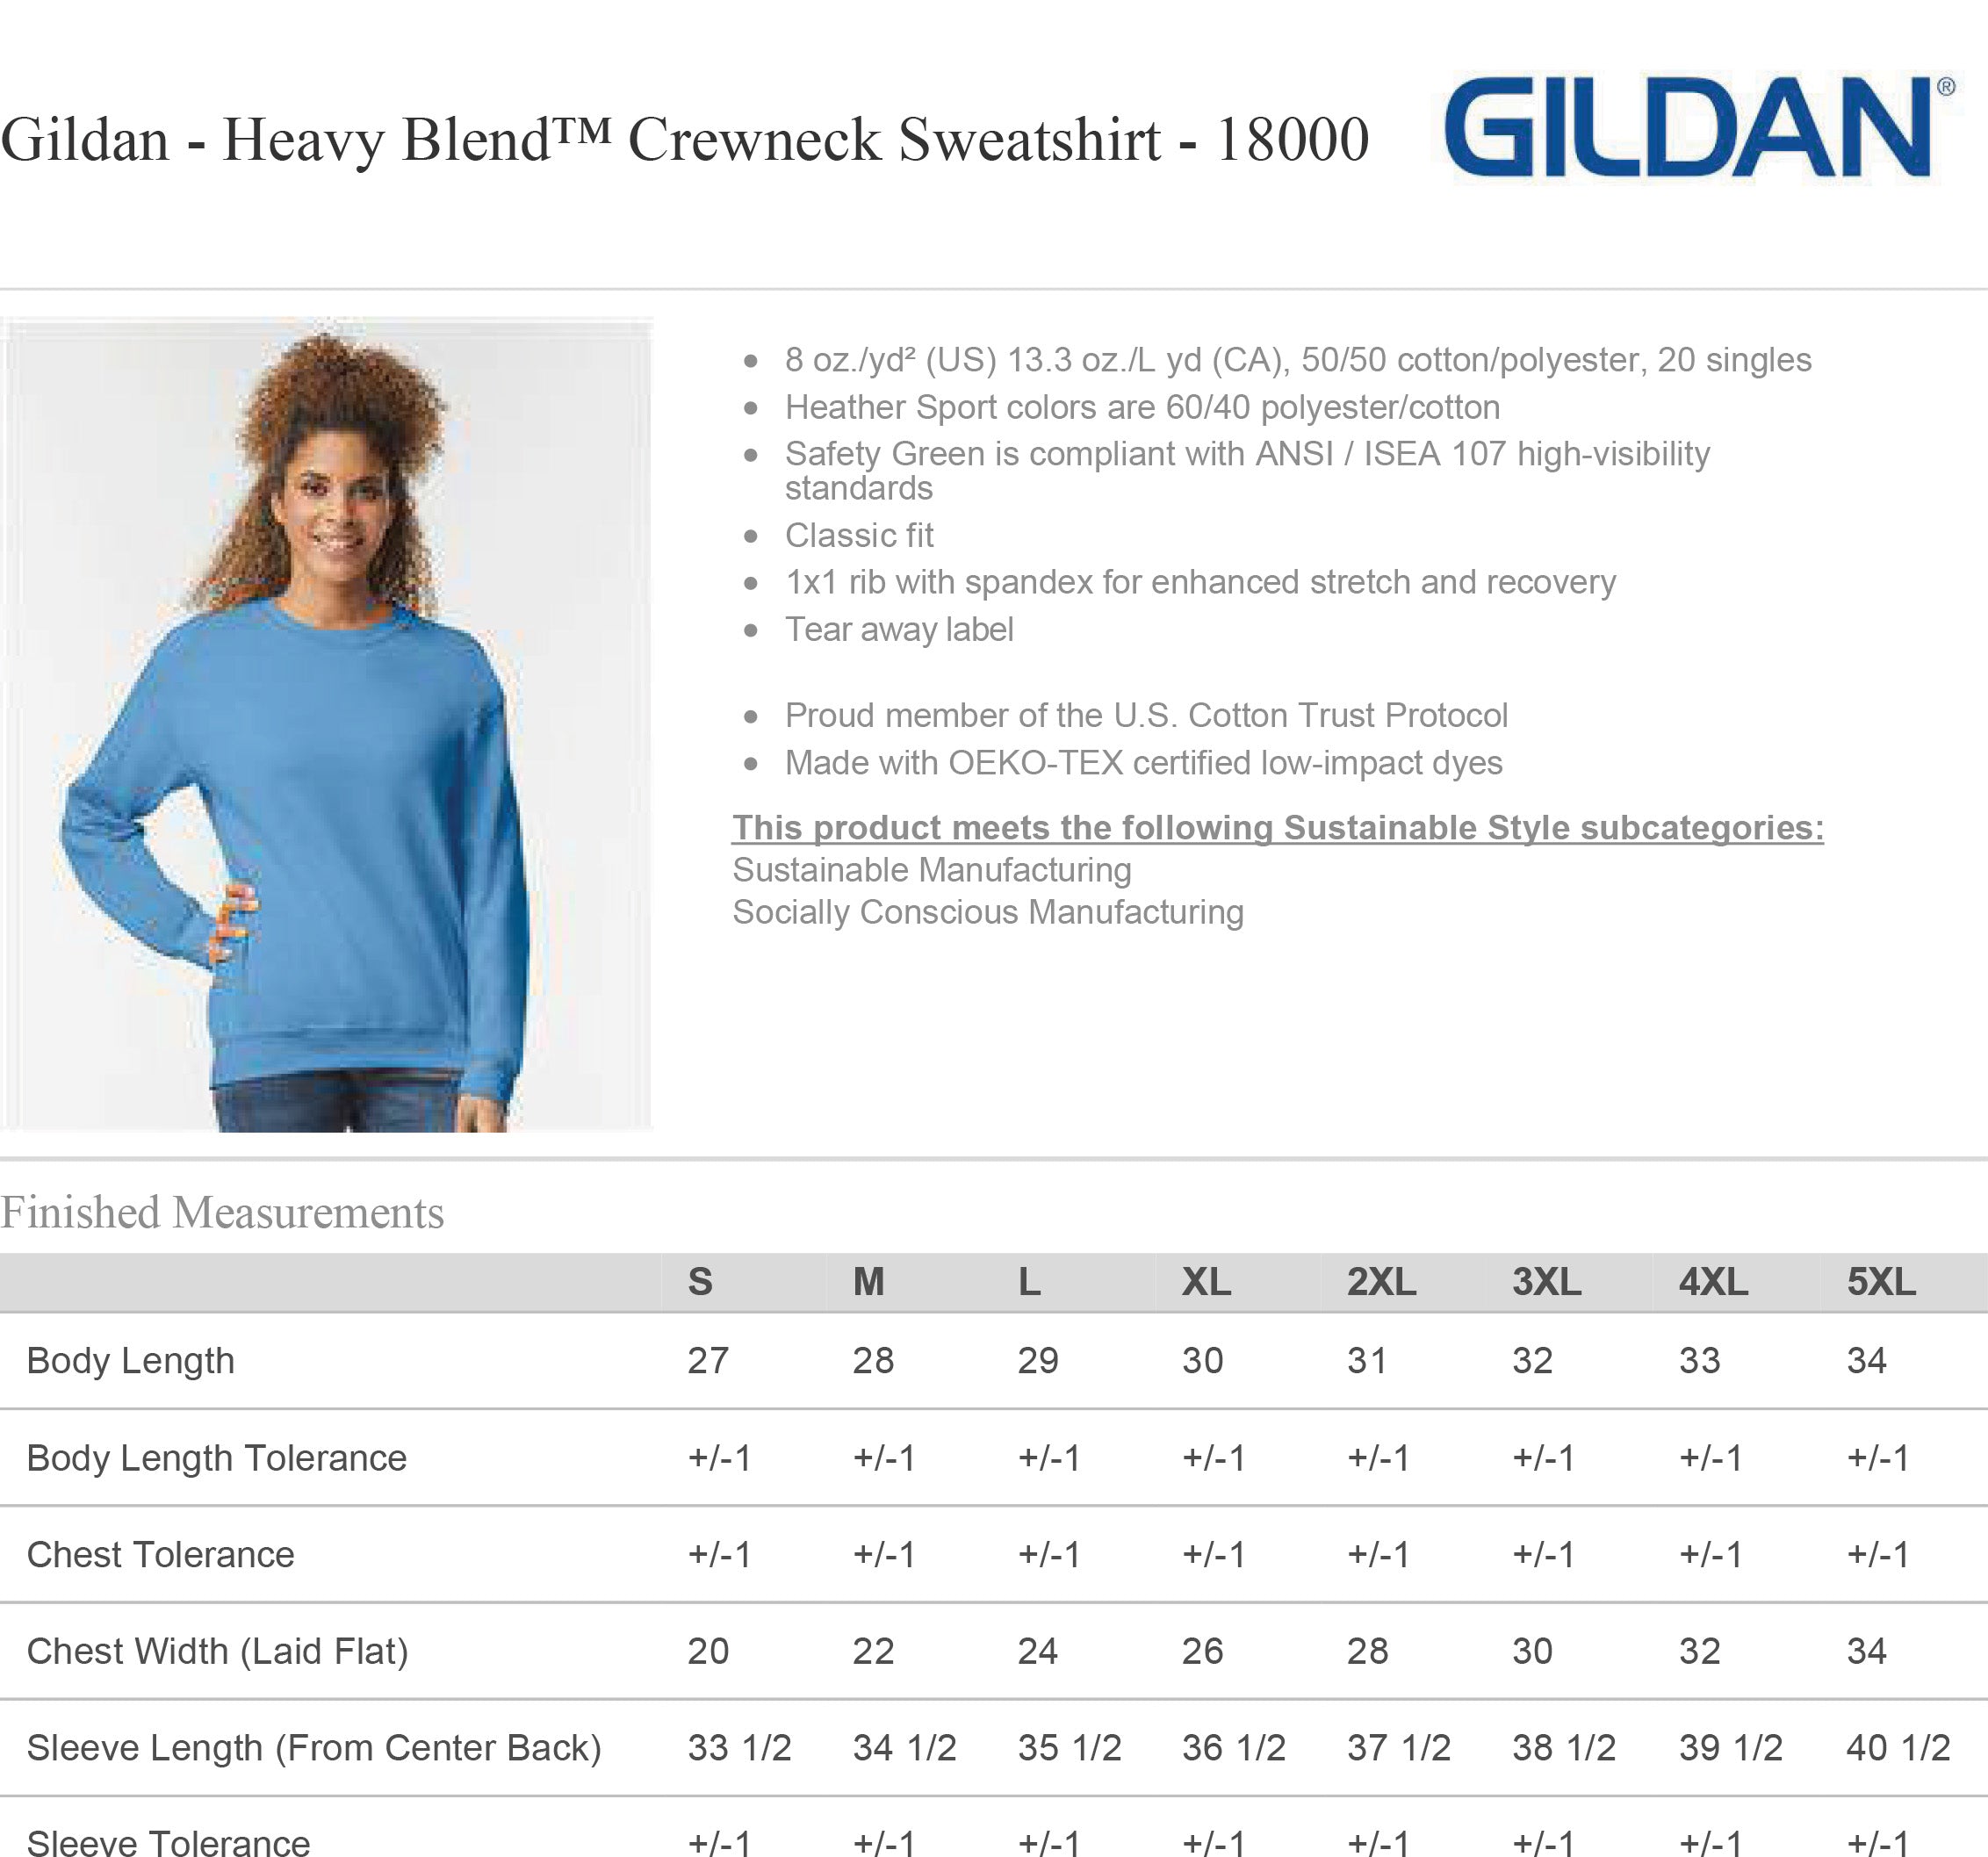 Heavy Blend Sweatshirt Sizing Chart and Specs (18000)